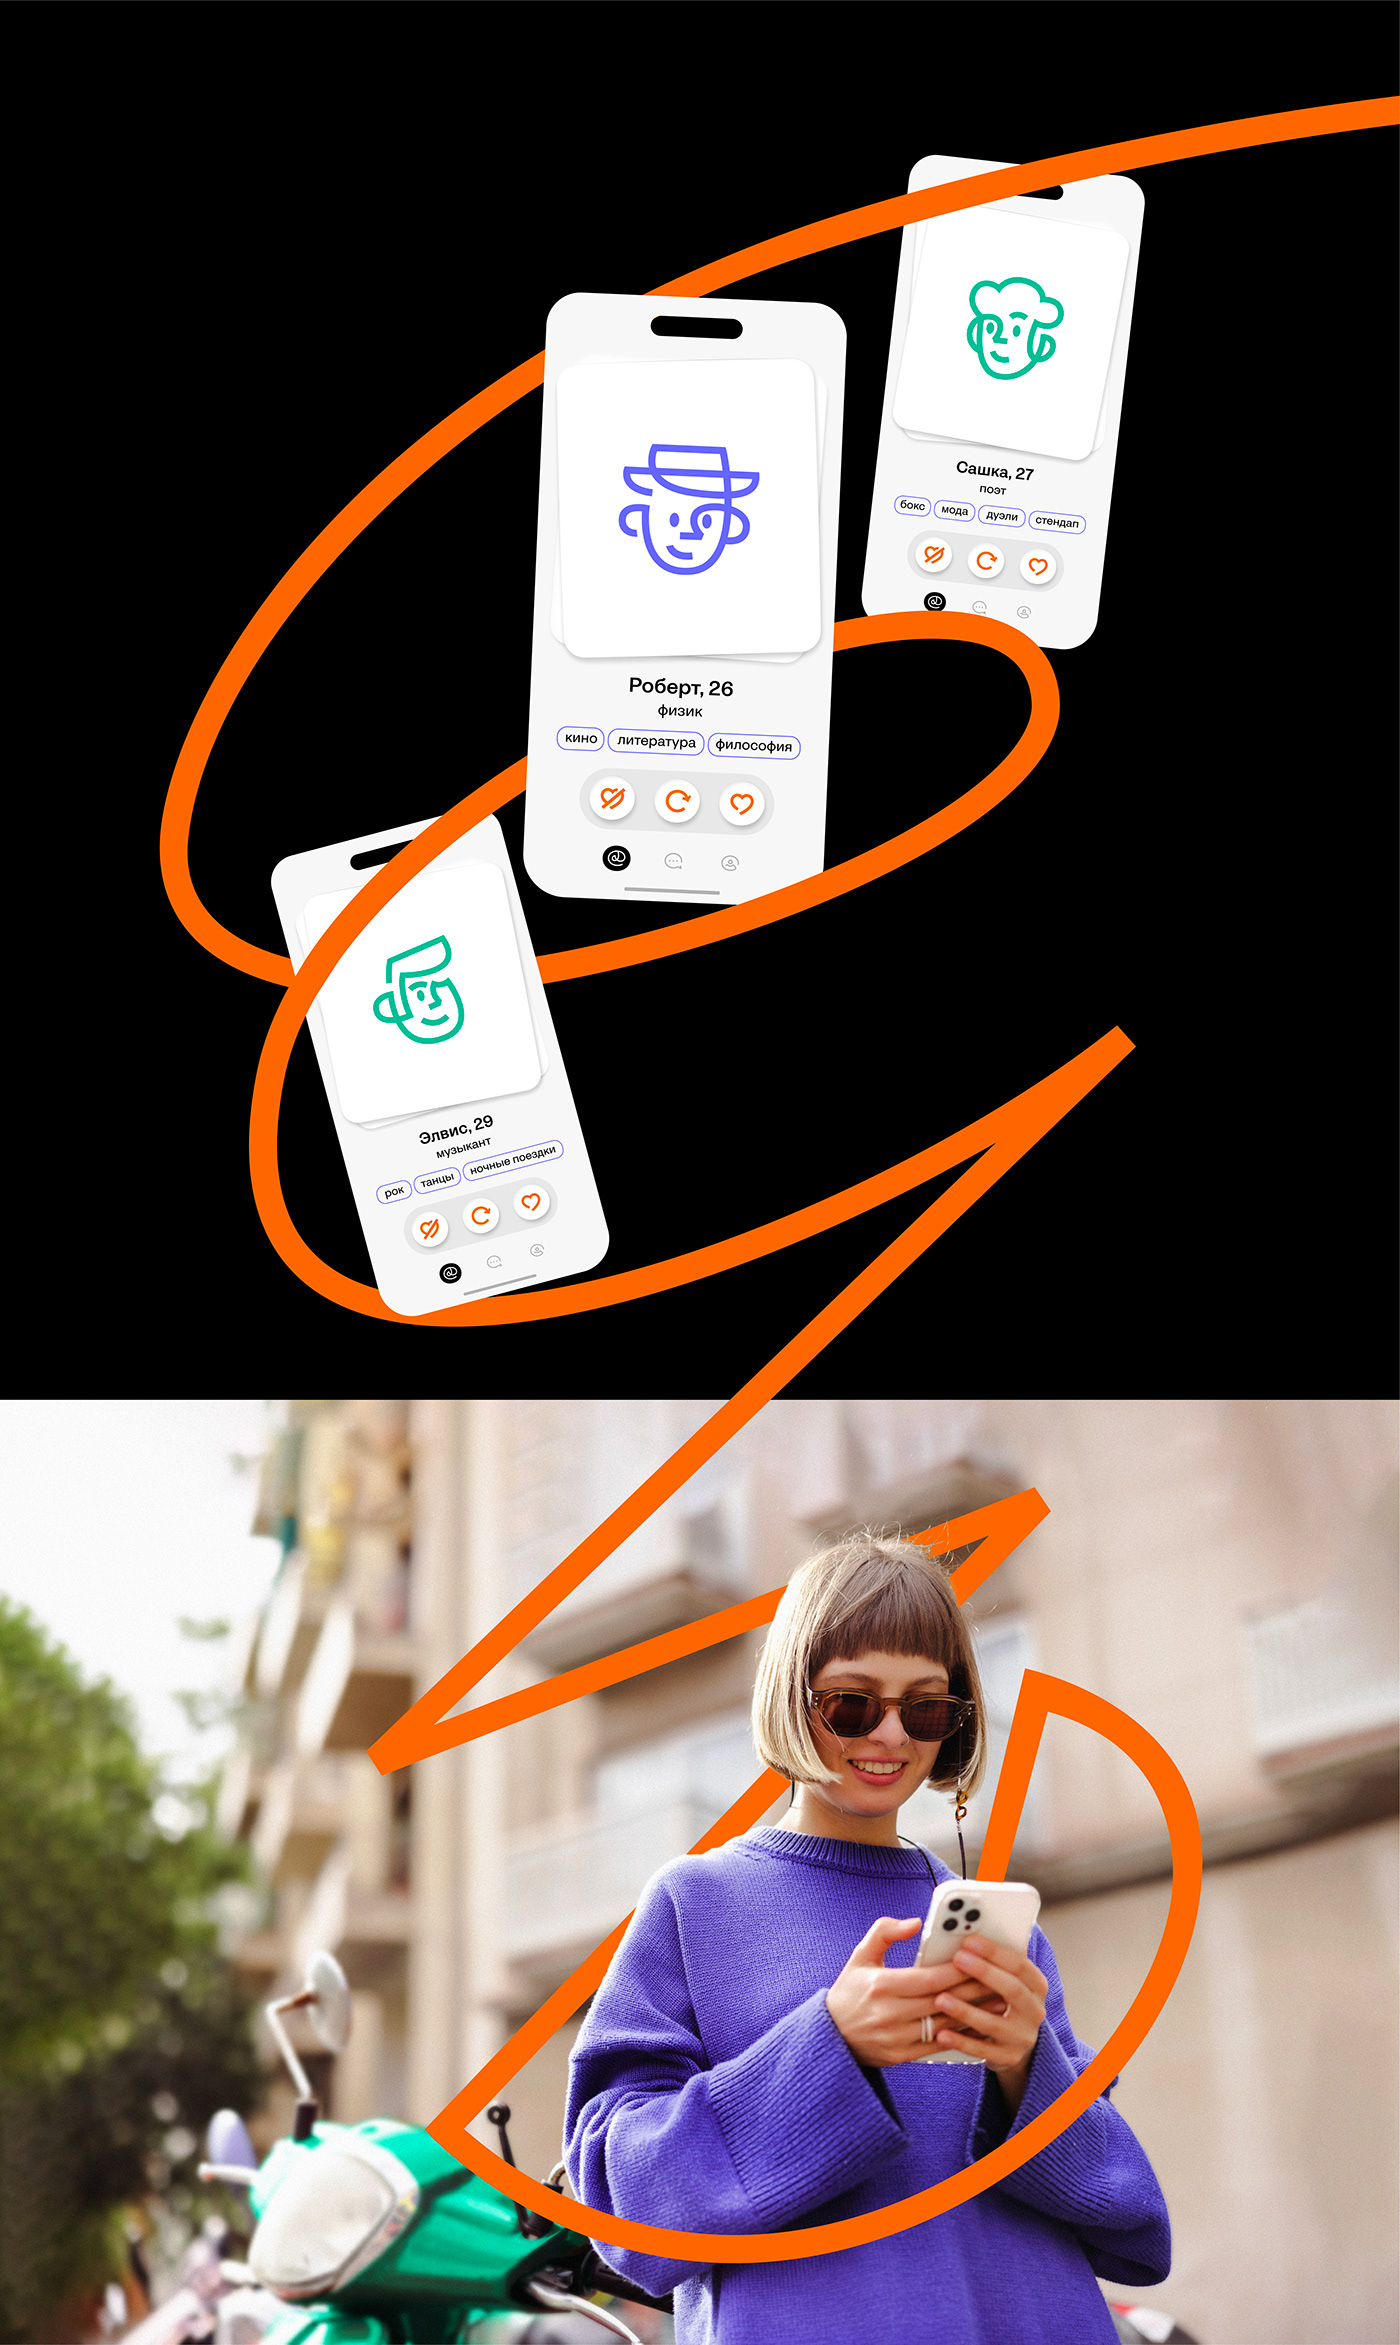 brand identity branding  visual identity logo presentation date apps lines Spiral dating app